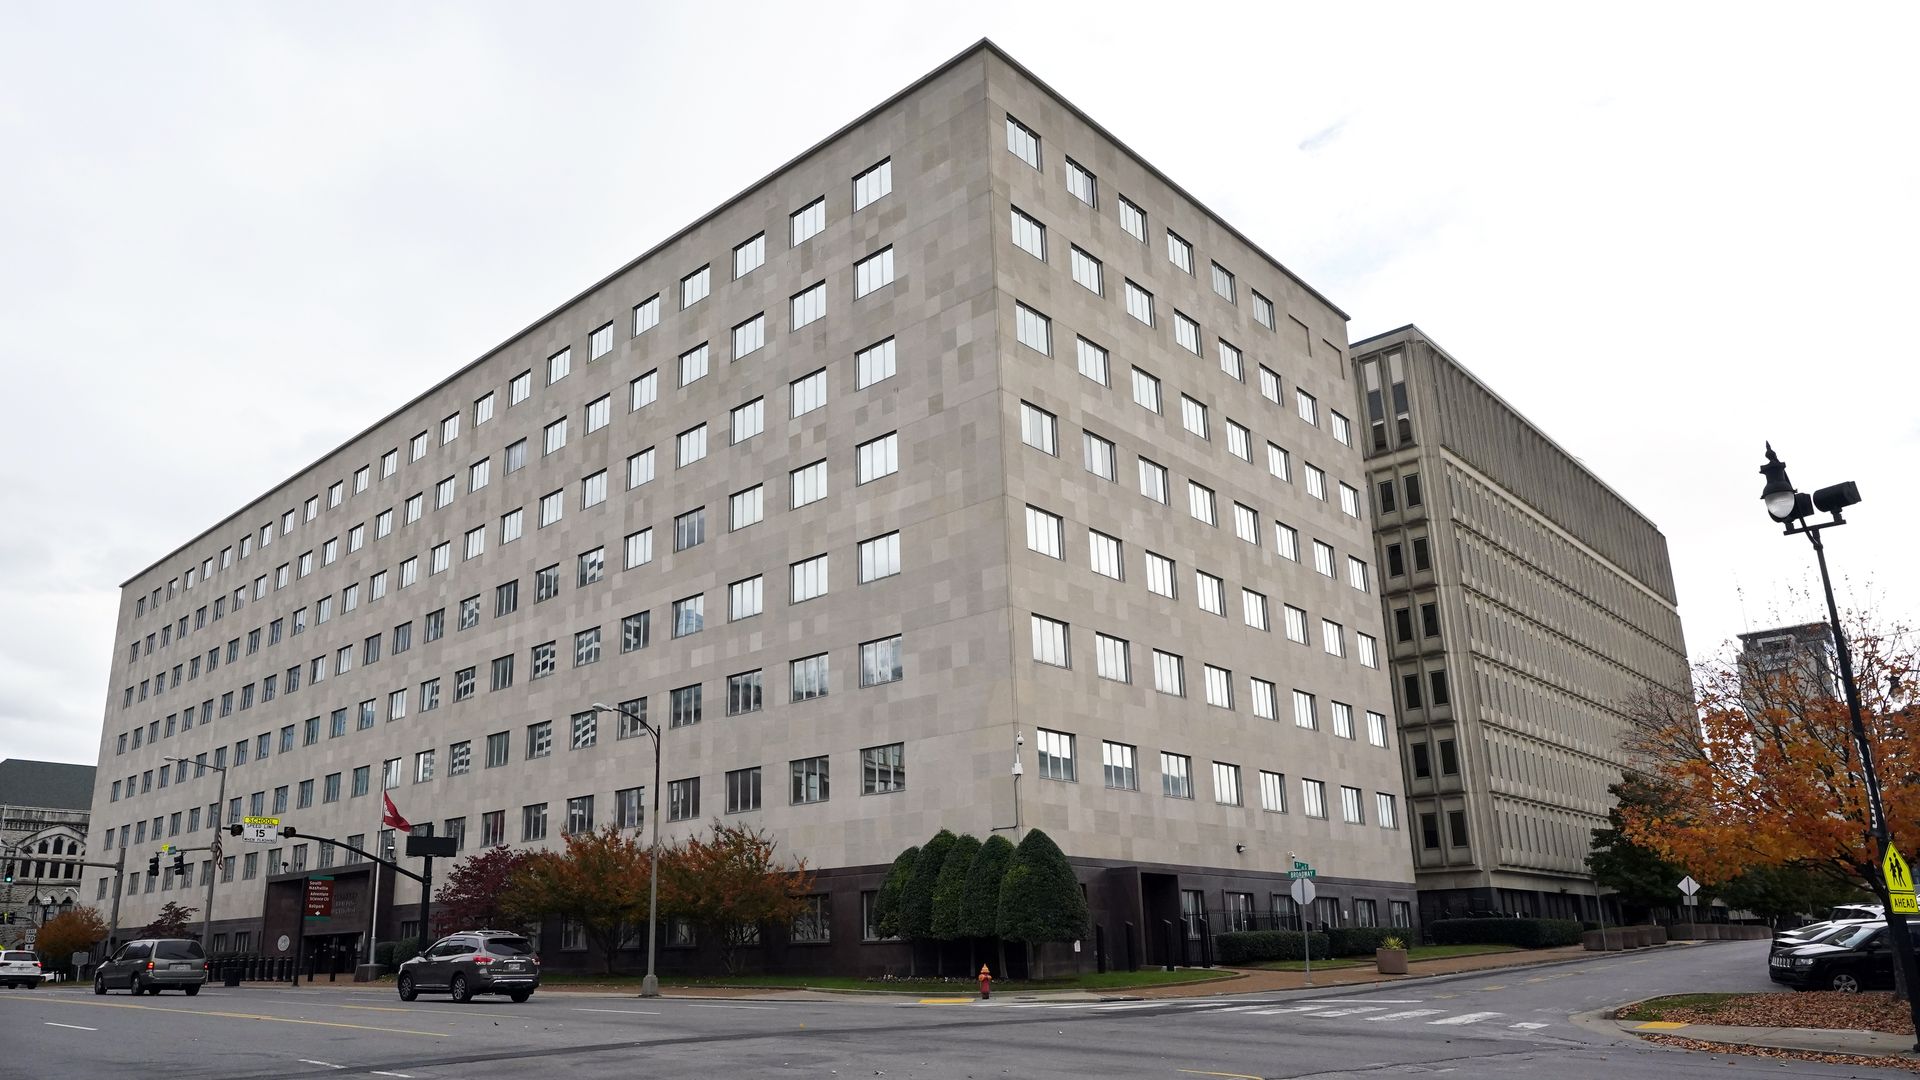 Exterior shot of the Estes Kefauver Federal Building in Nashville.